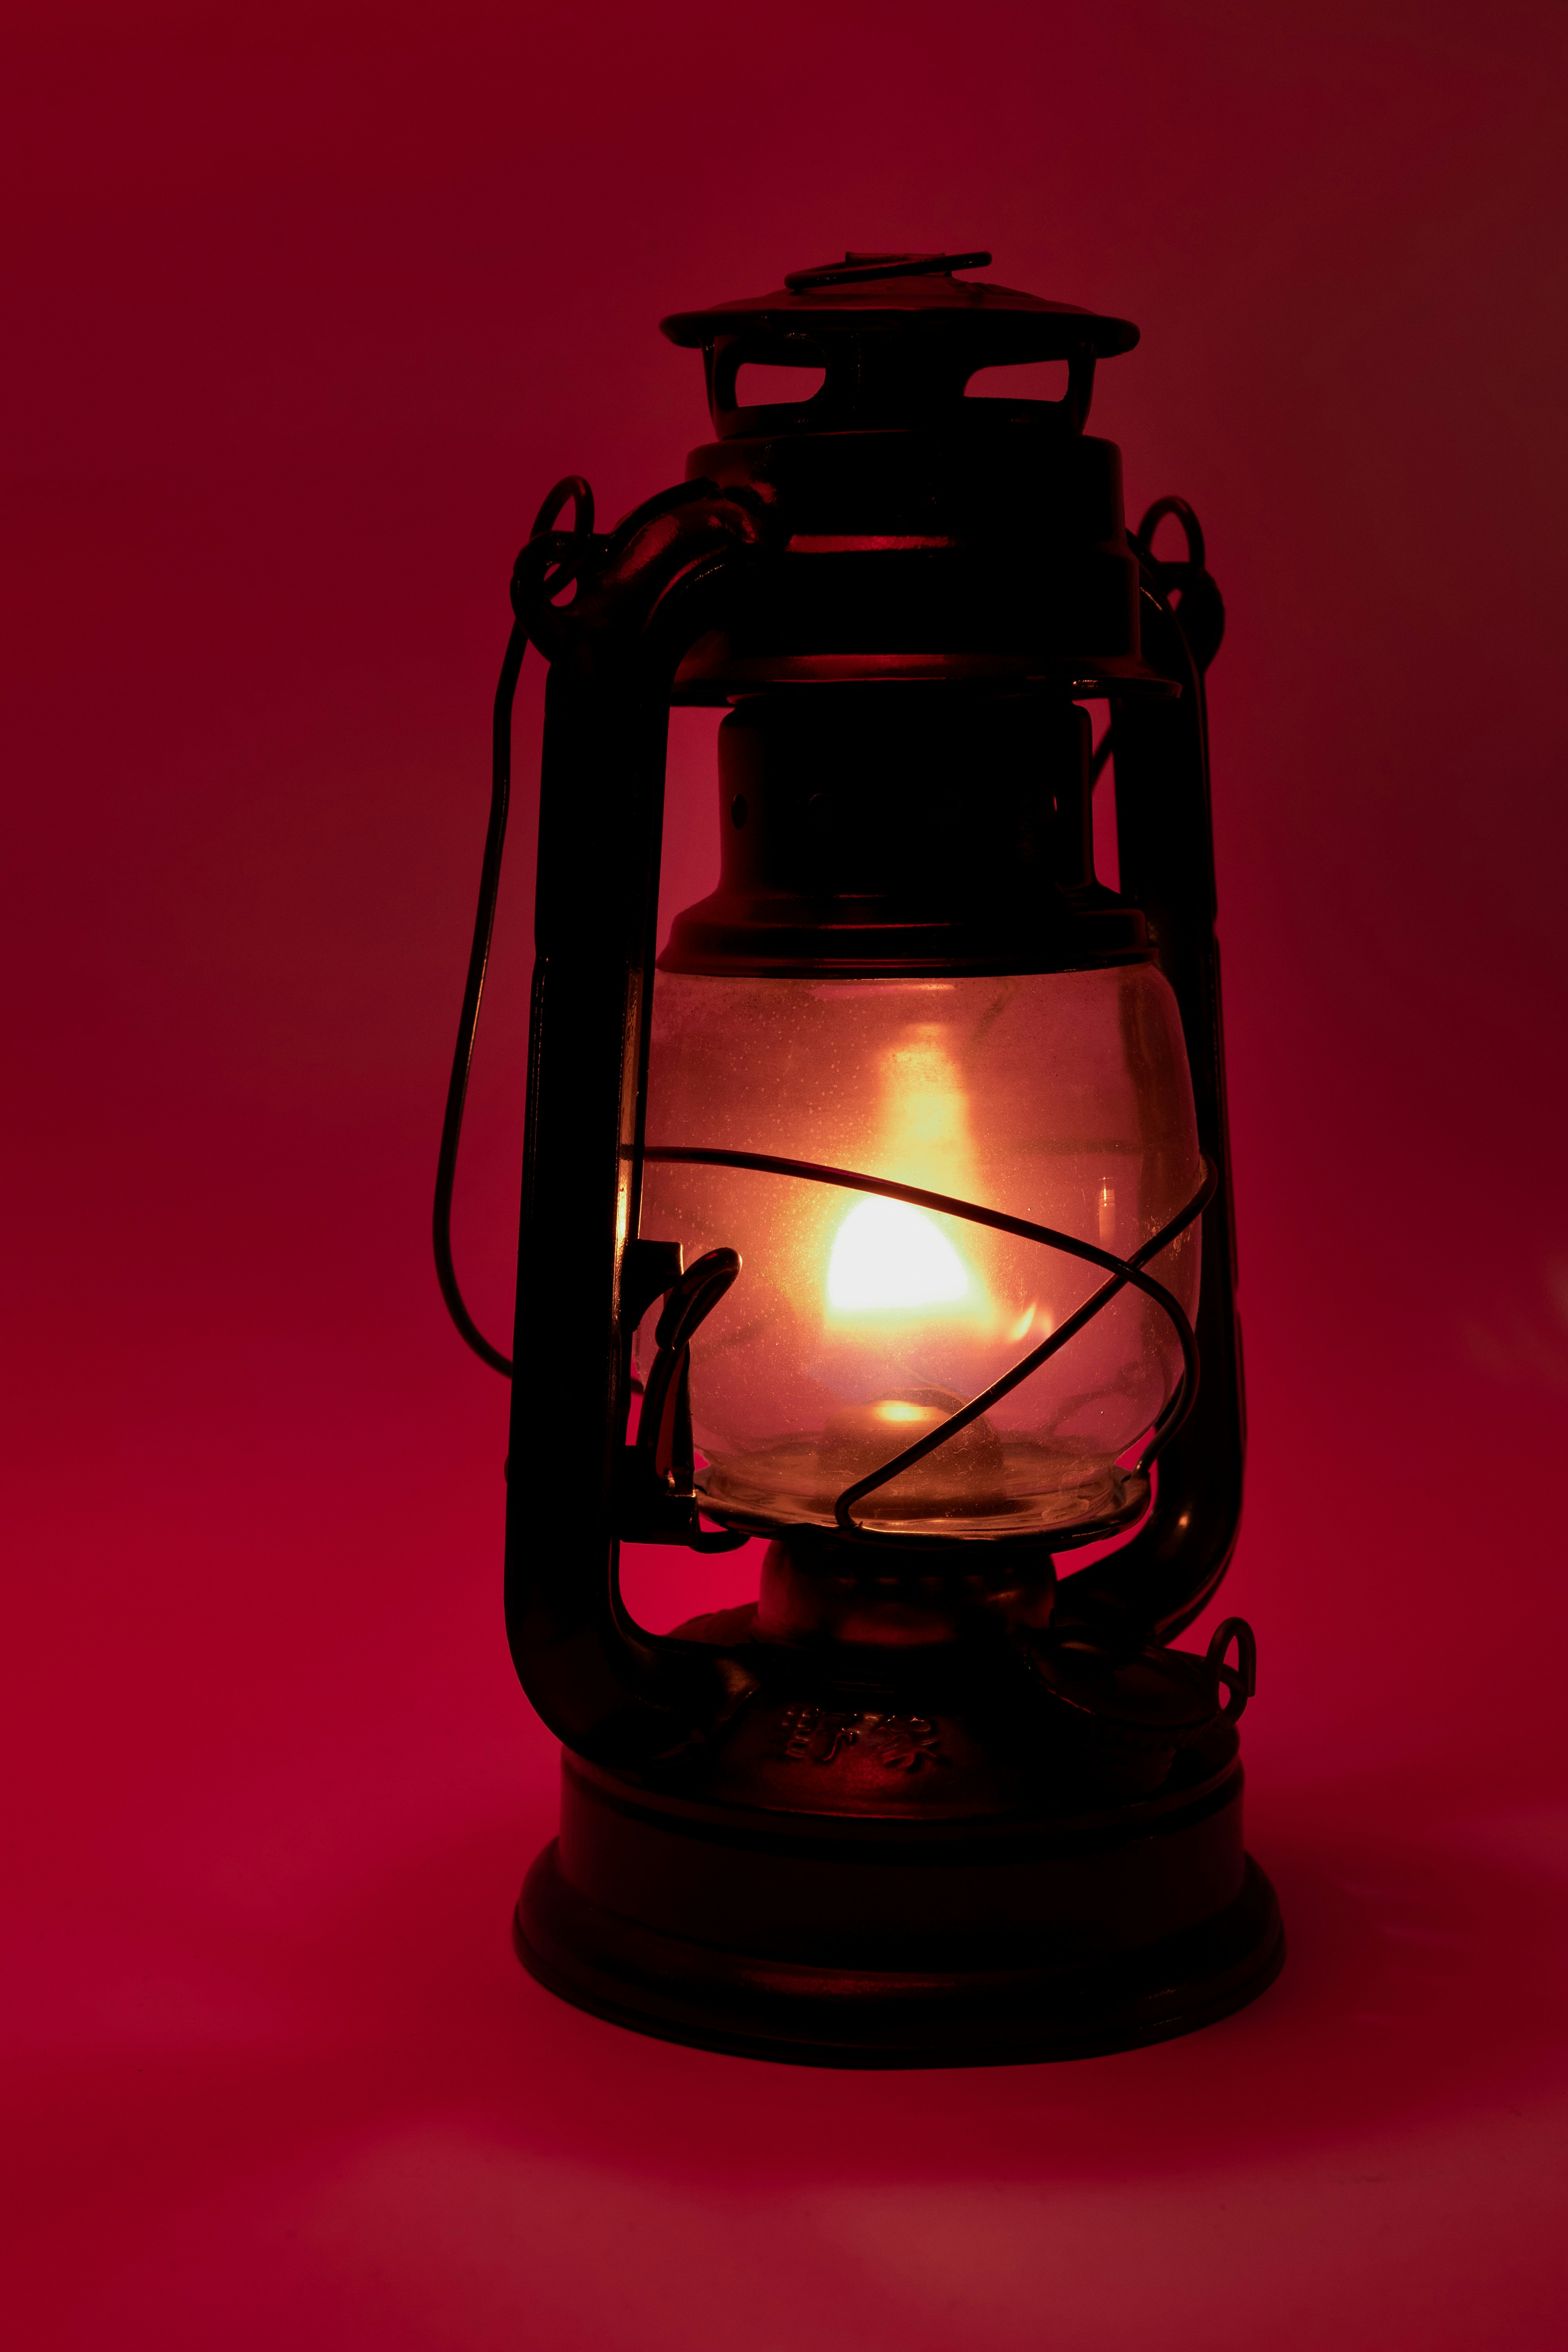 black lantern lamp turned on in red room